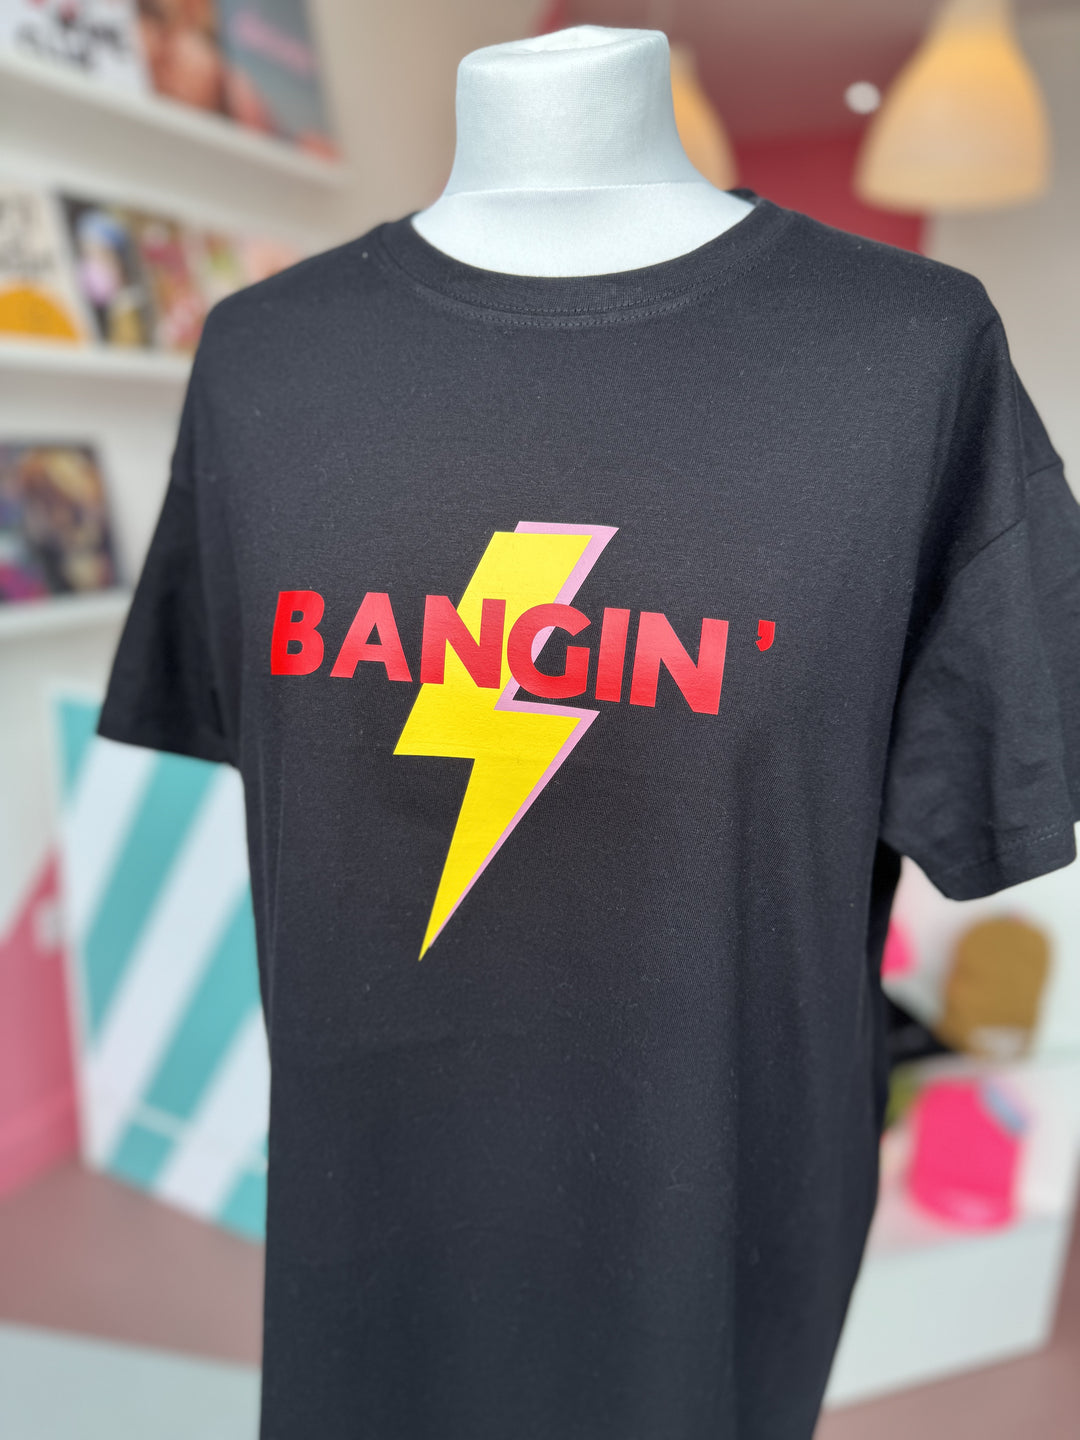 *Bangin T-Shirt (Ready To Ship)